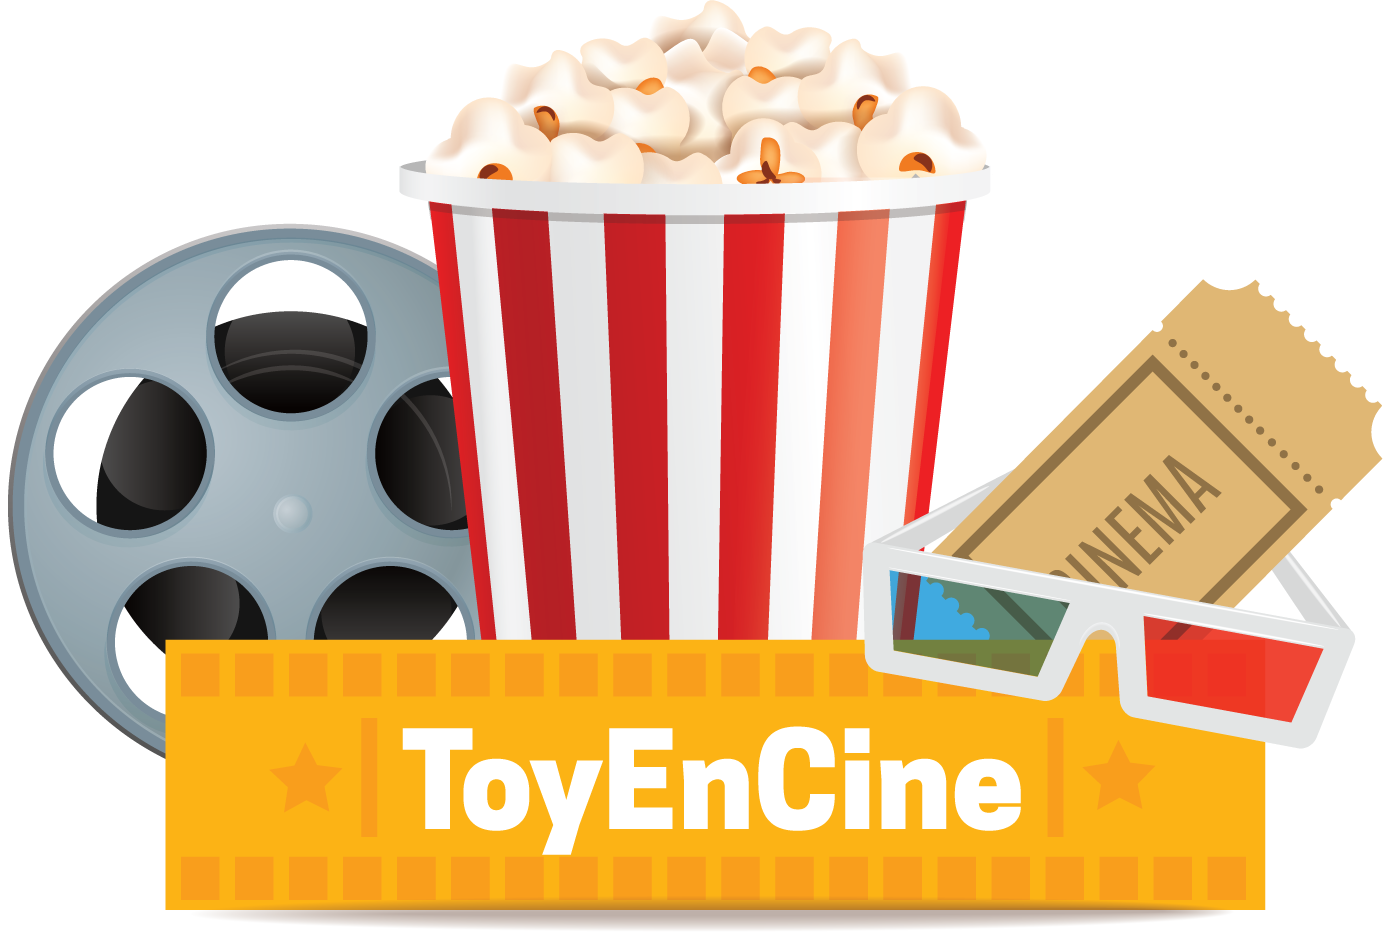 'Toy En Cine